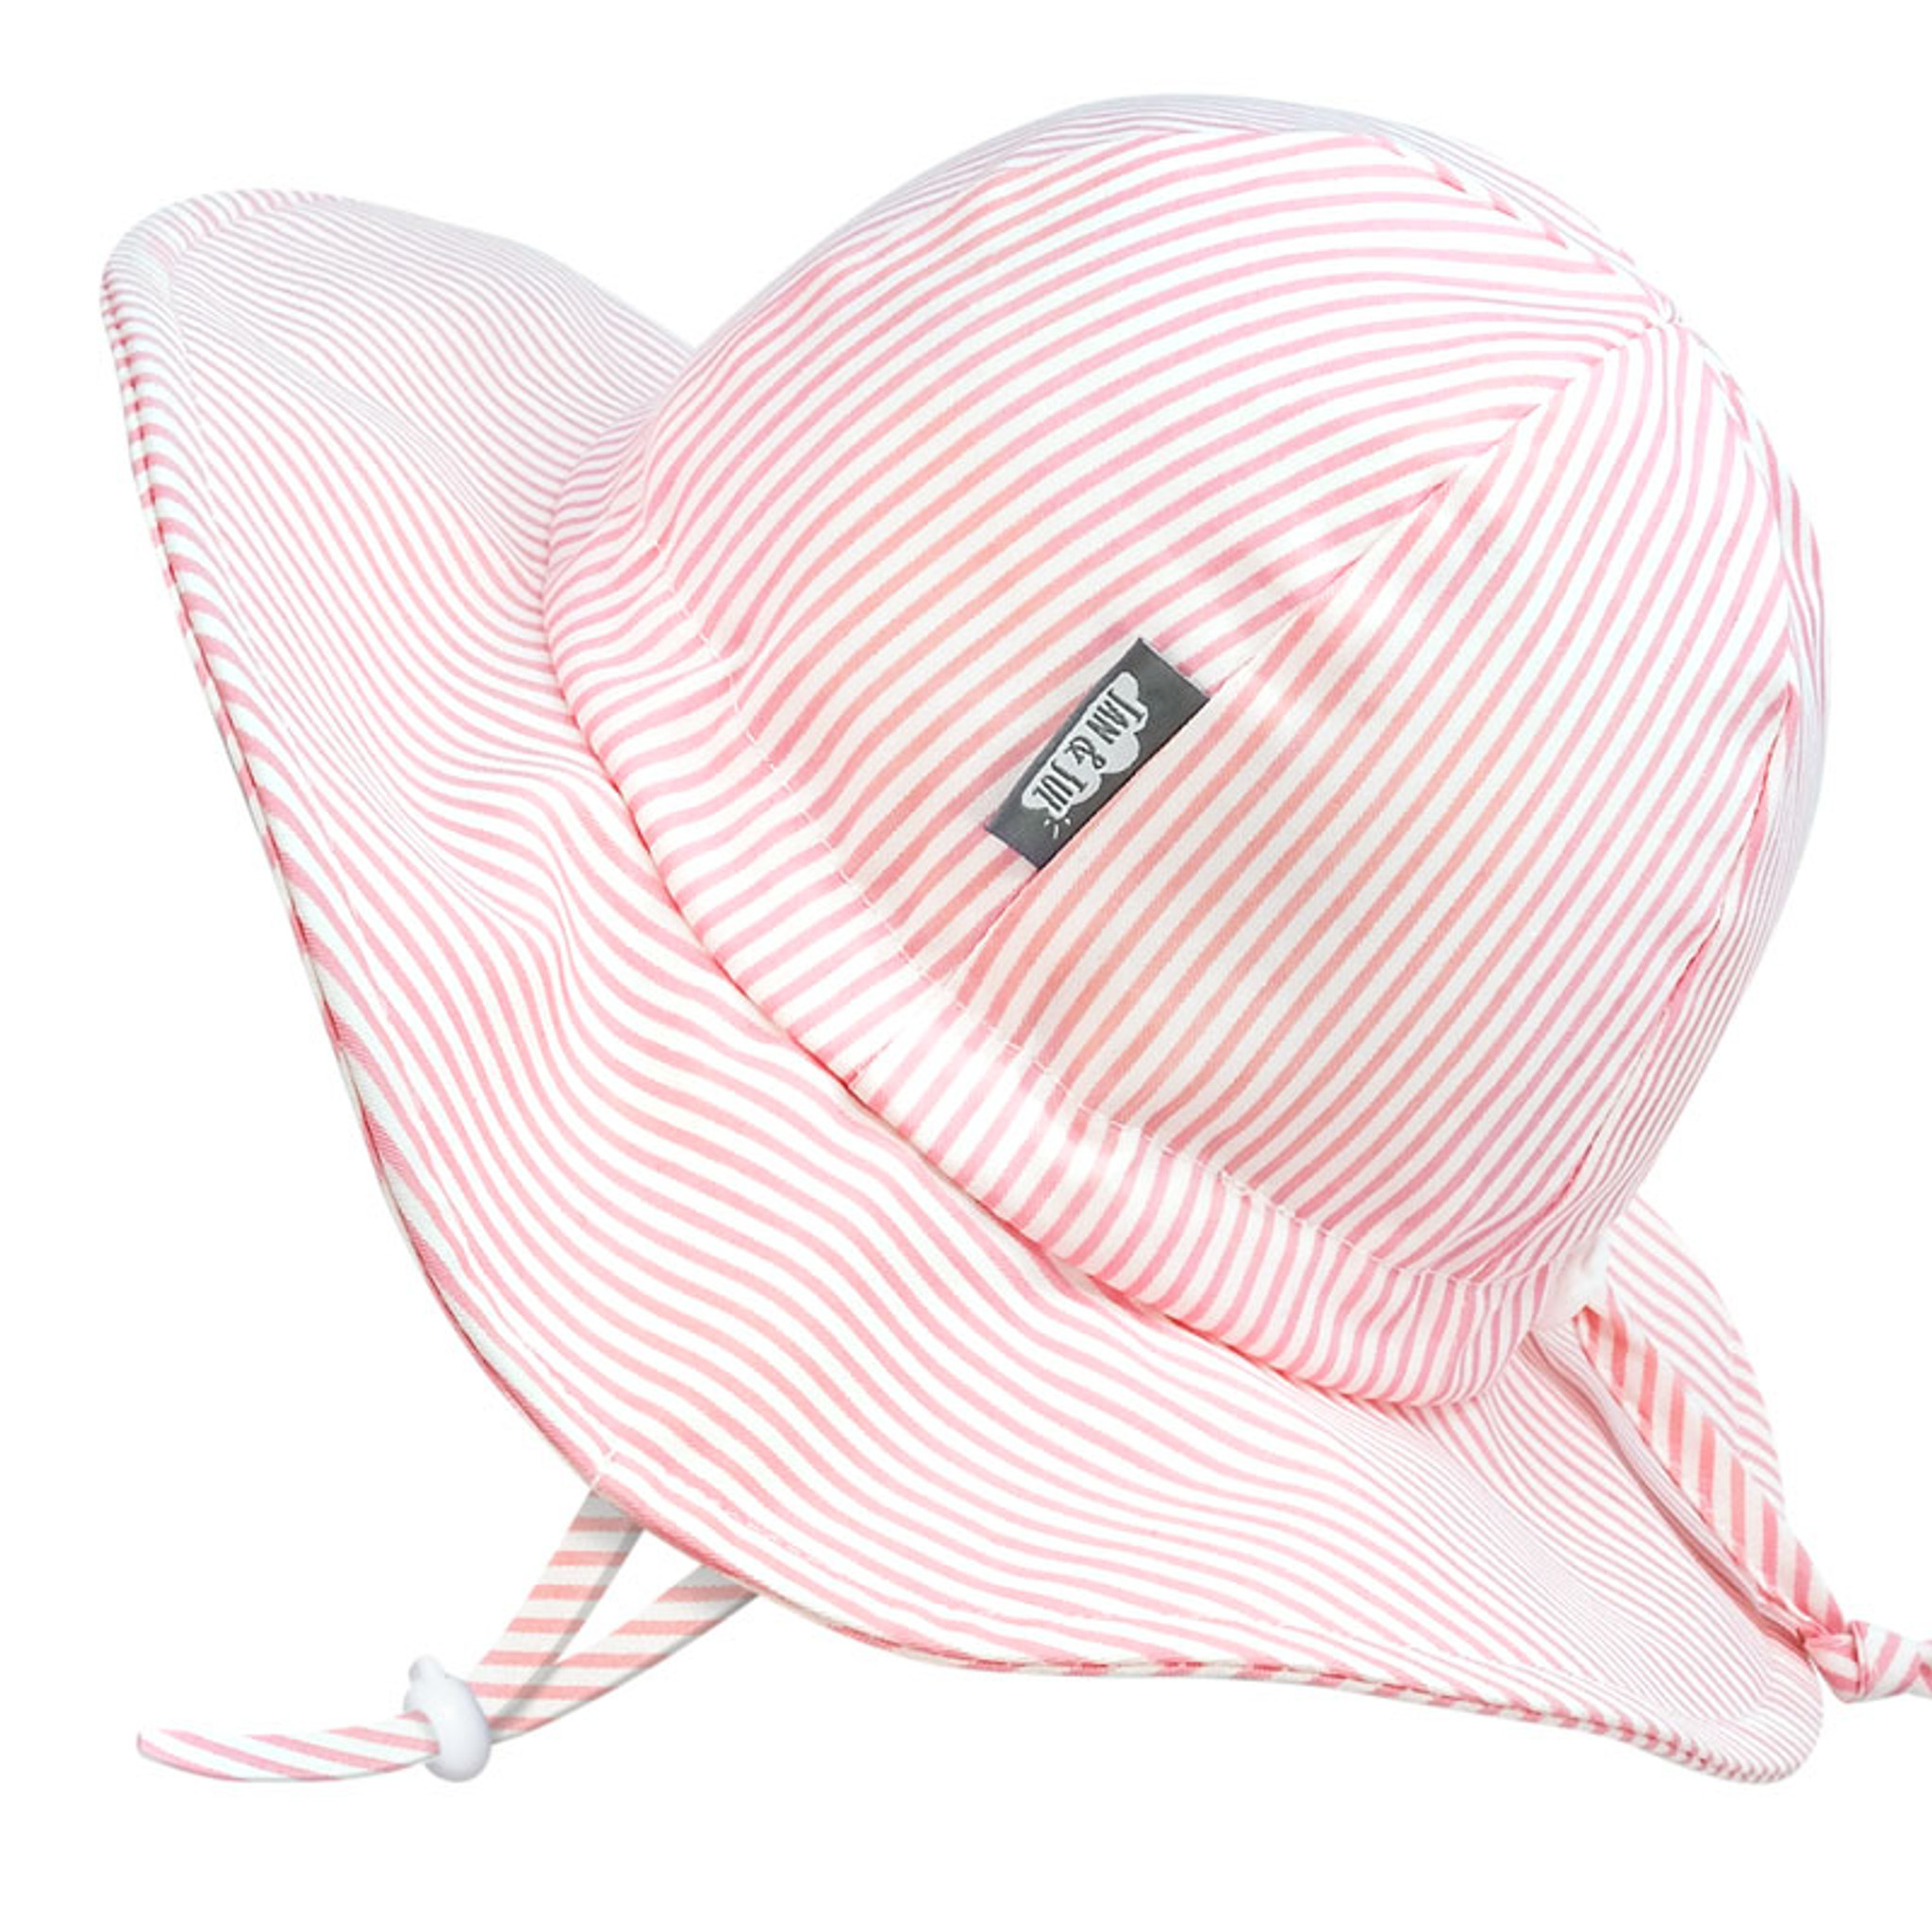 Jan & Jul Floppy Cotton Sun Hat - Pink Stripes